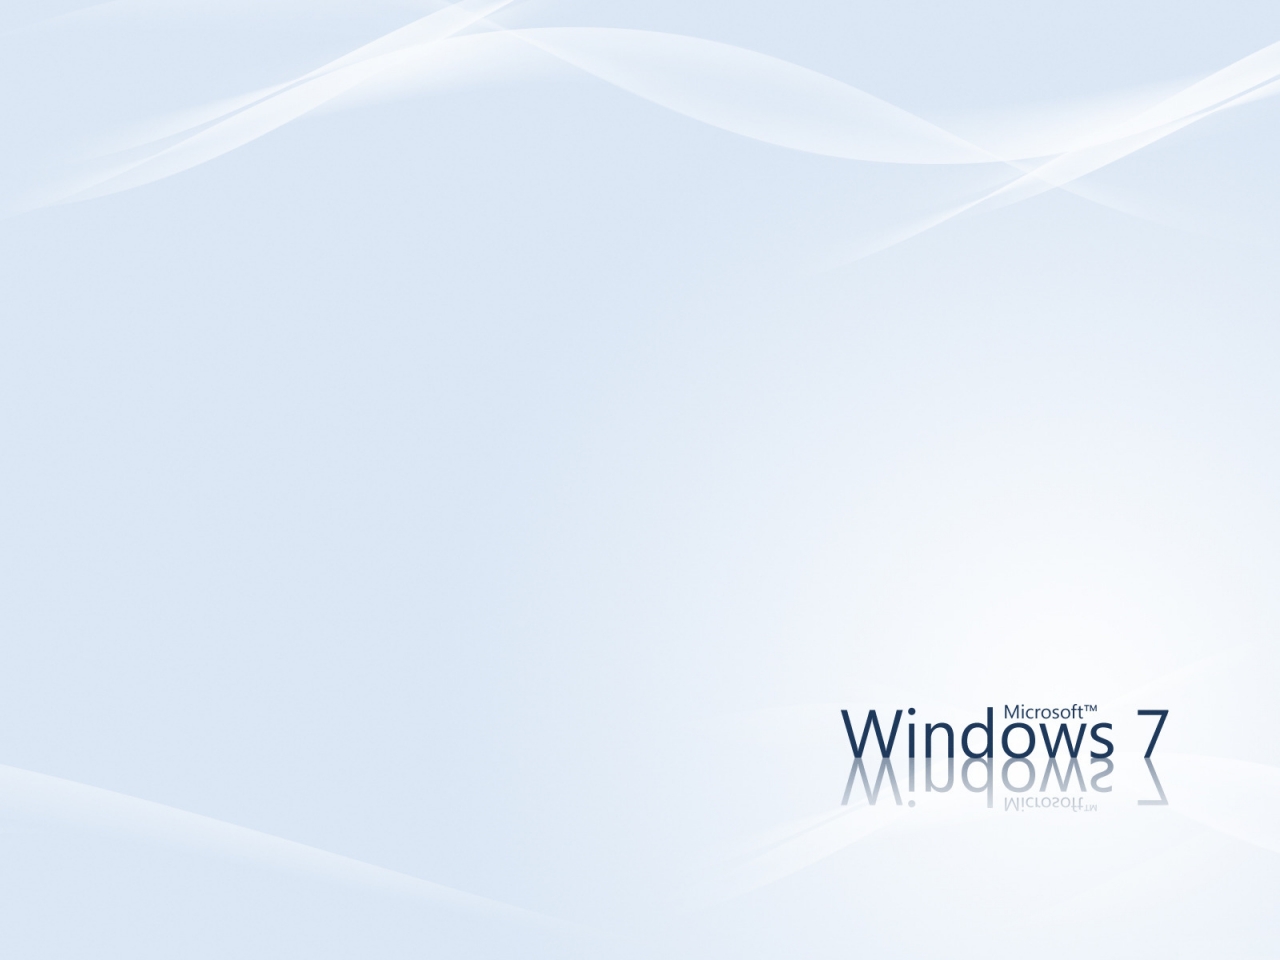 Windows 7 Bright for 1280 x 960 resolution